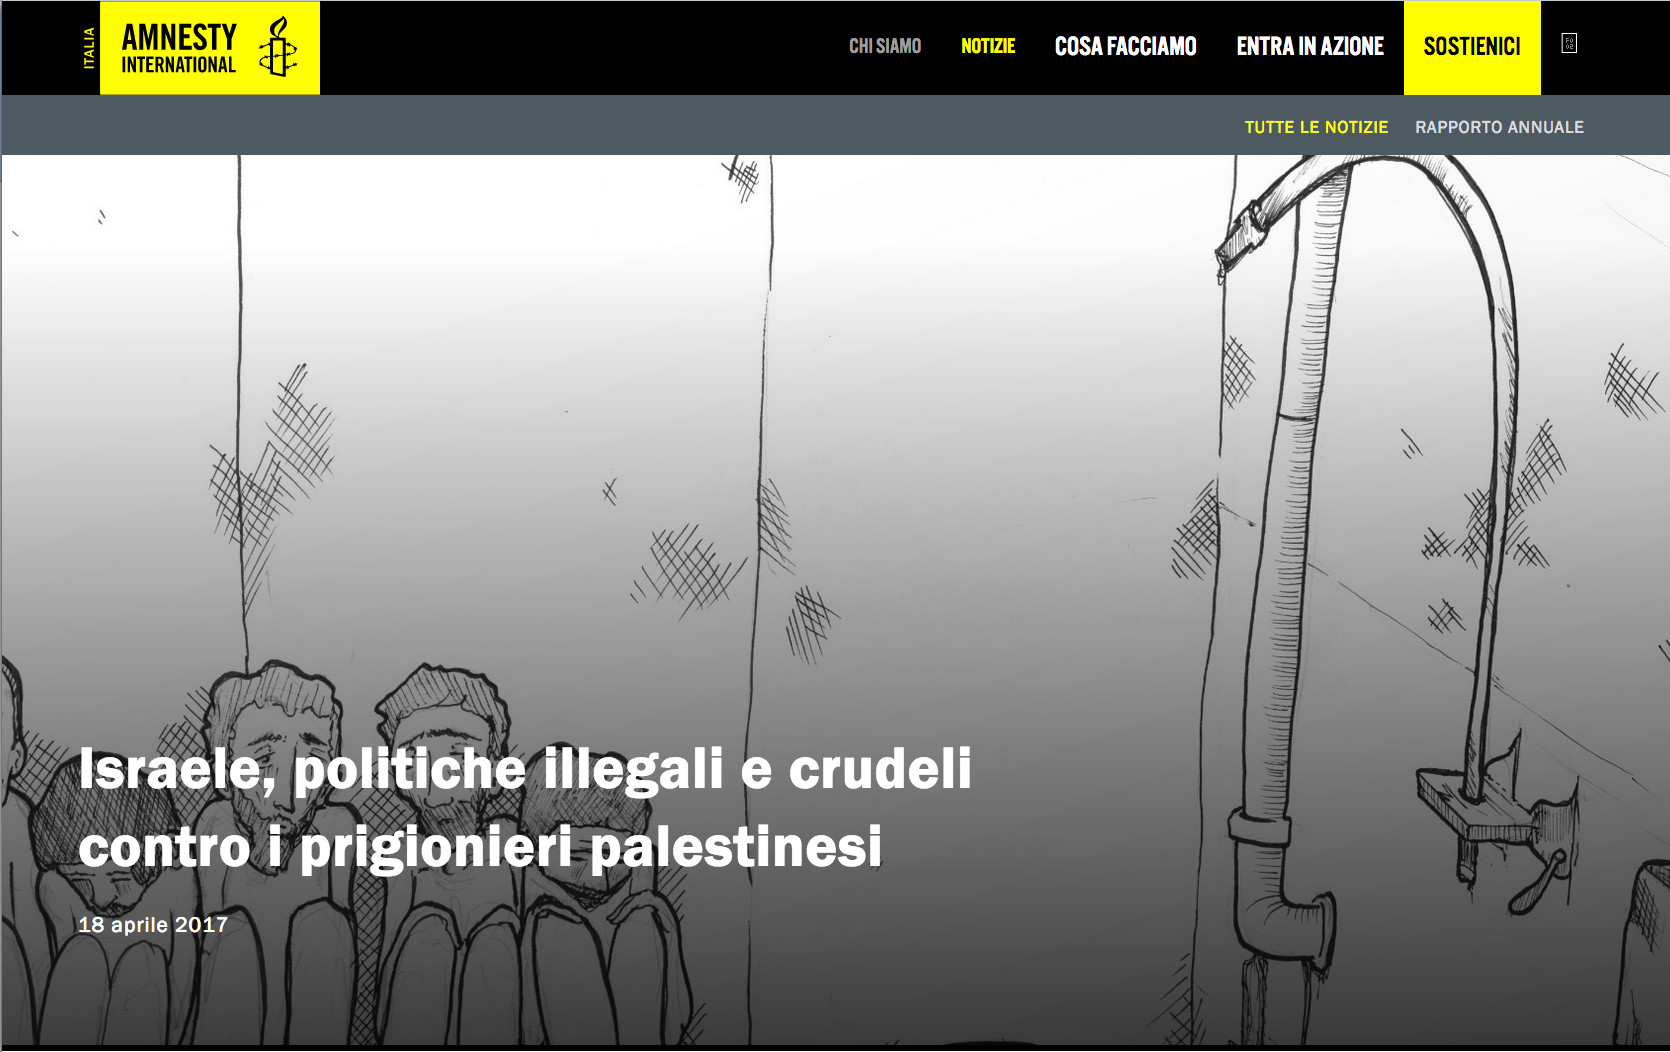 CAMPAGNA PRIGIONIERI PALESTINESI. La testimonianza di Amnesty International.